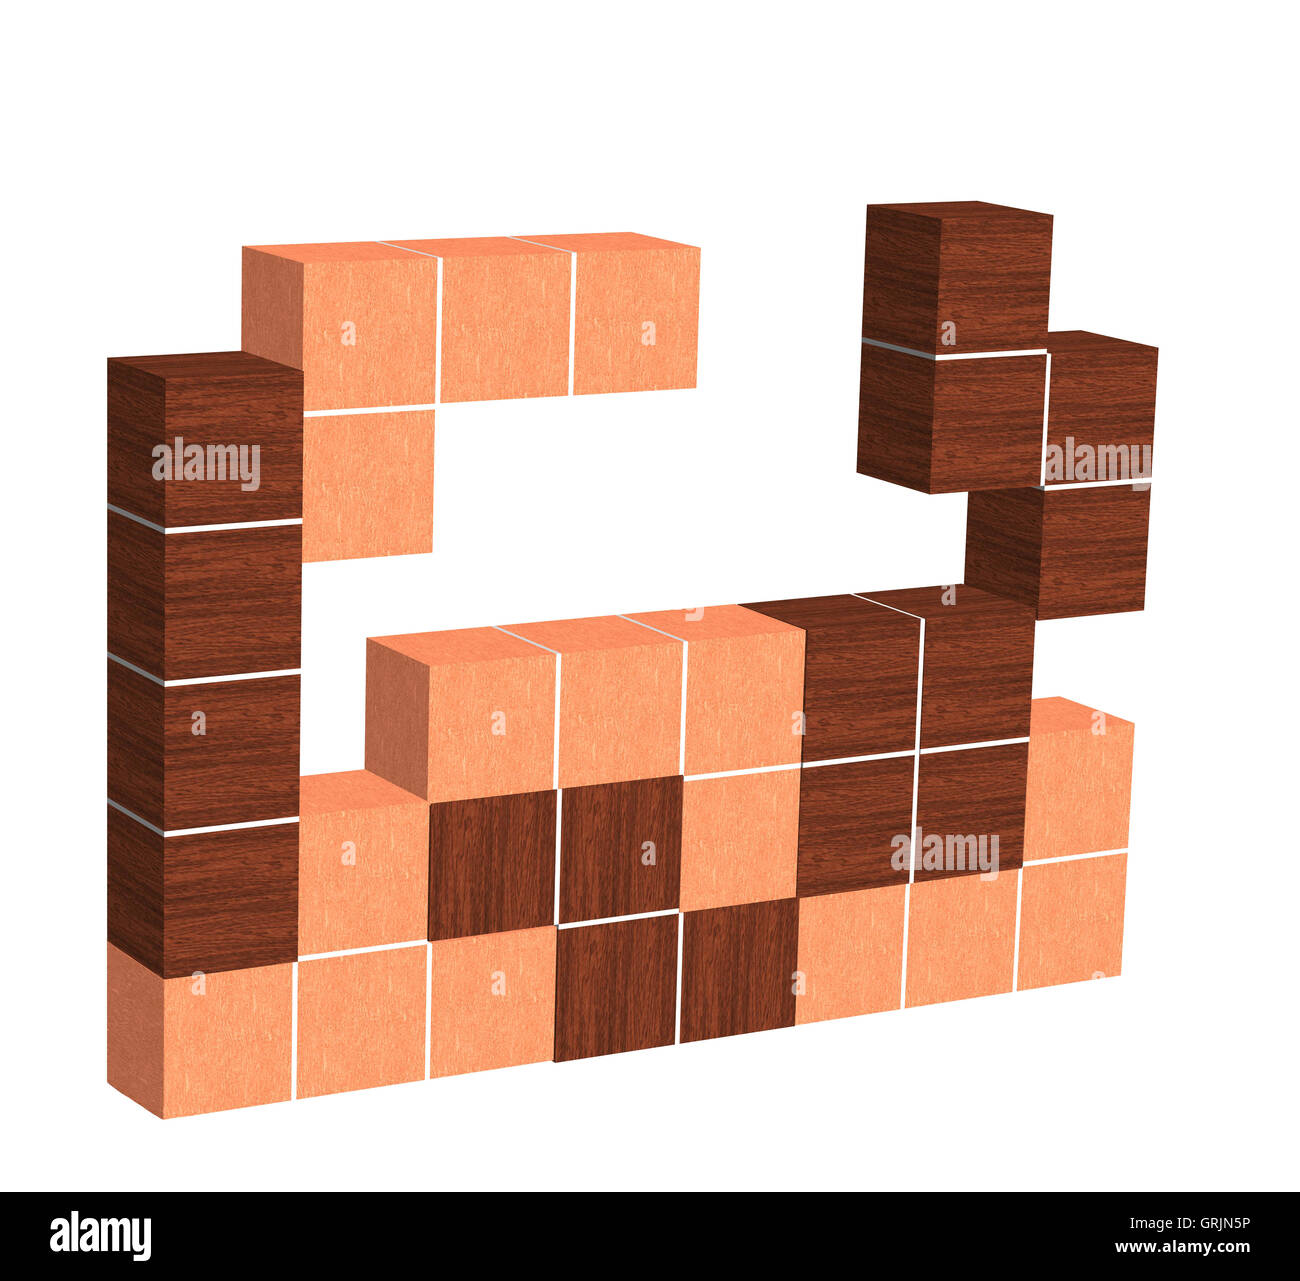 tetris game 3D wooden cubes Stock Photo